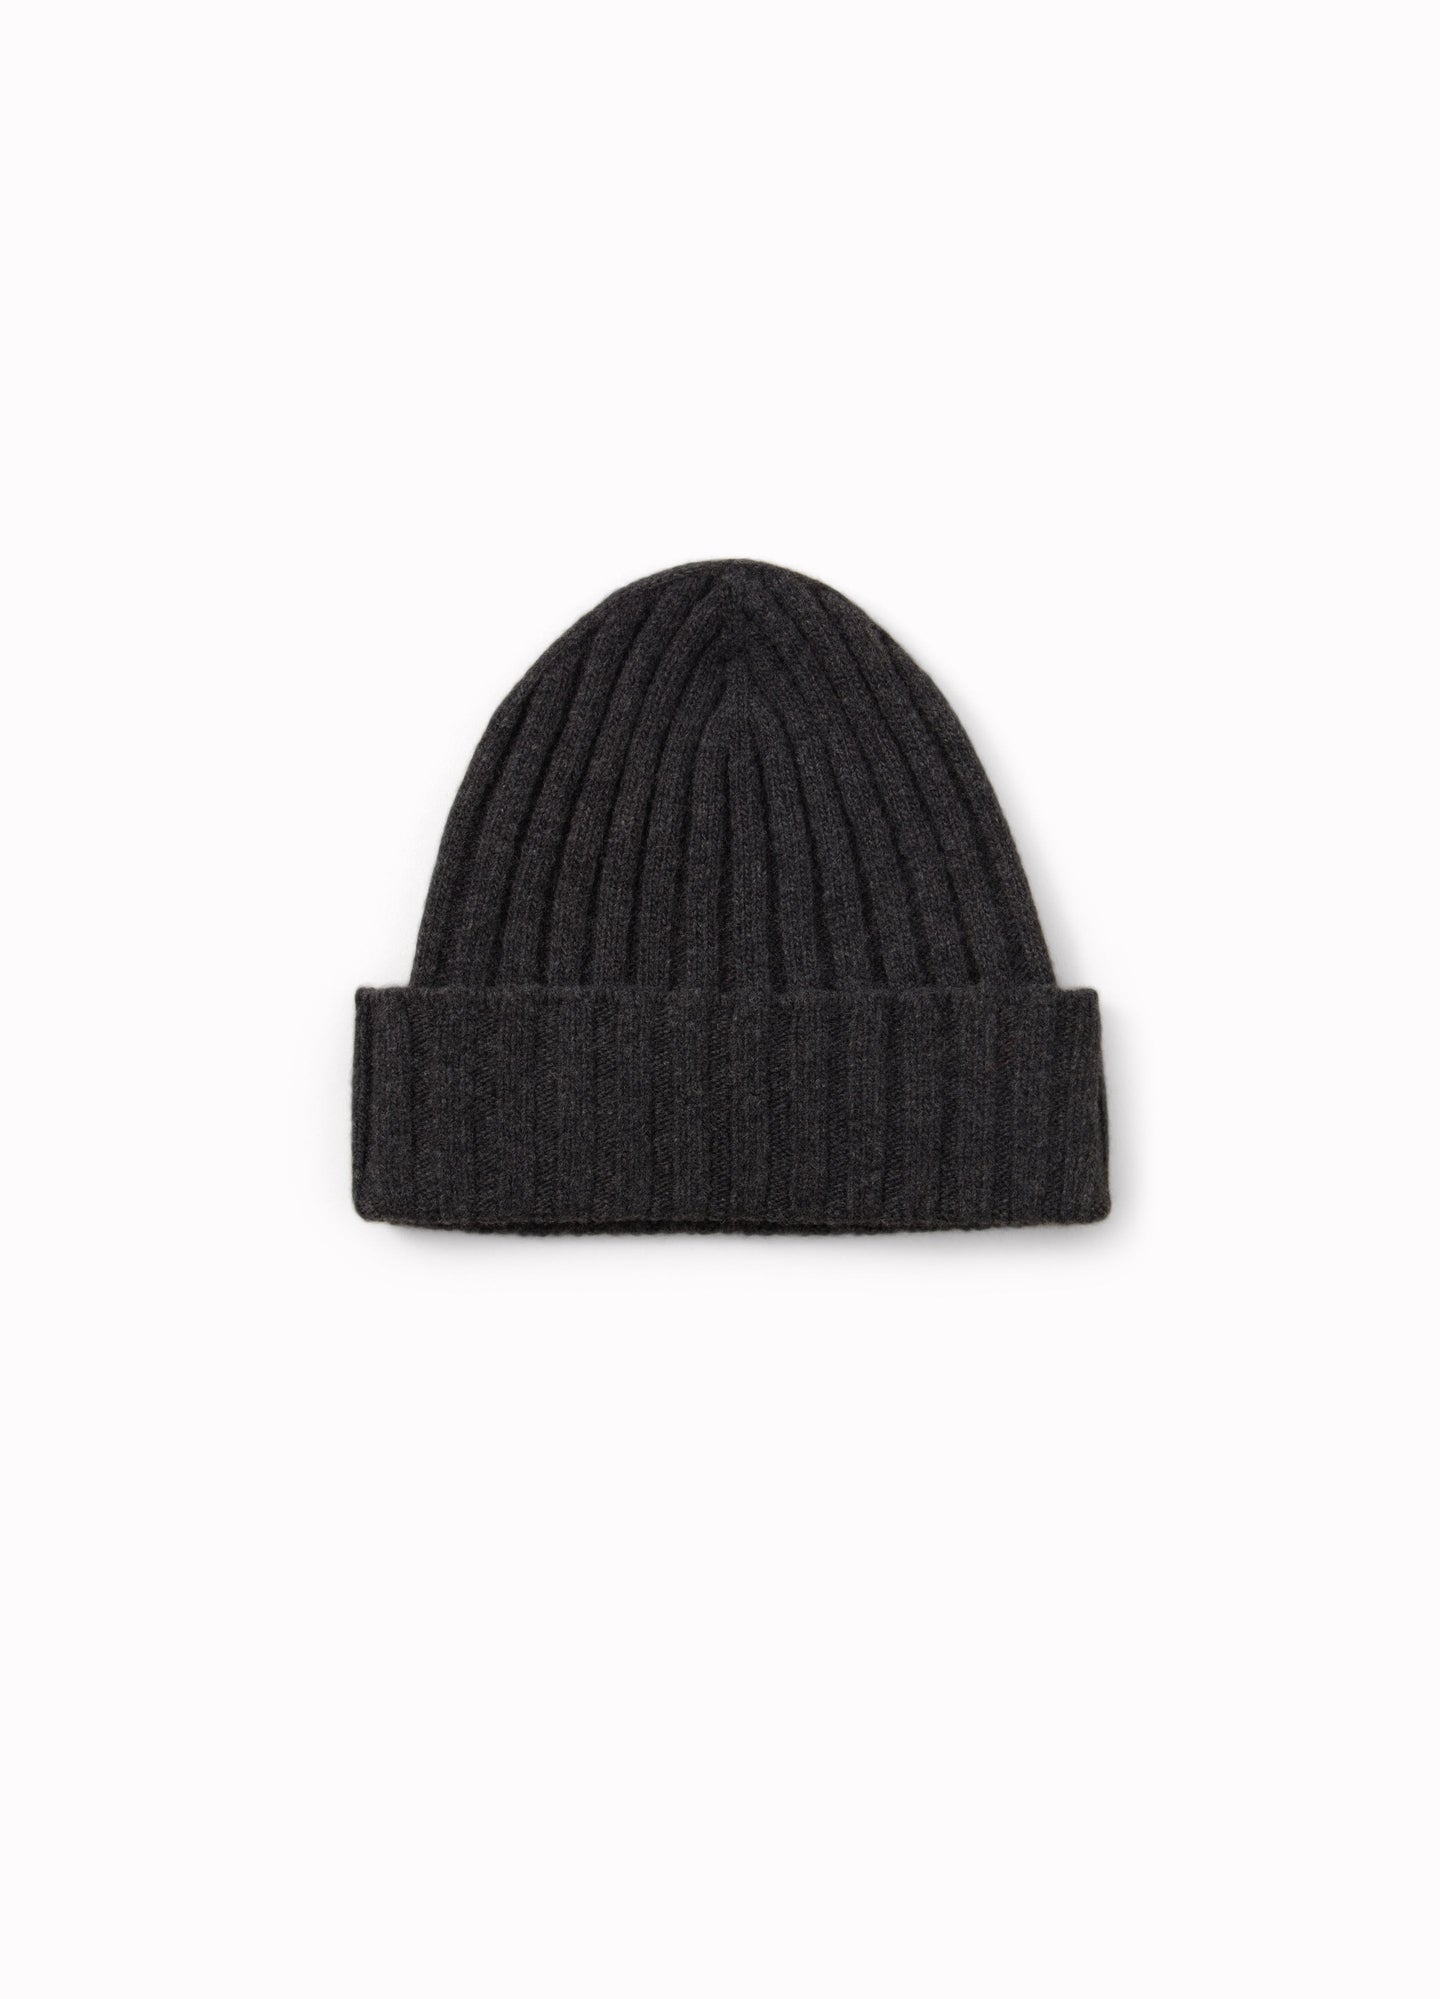 Merino/Cashmere Knit Hat - Charcoal Berg & Berg